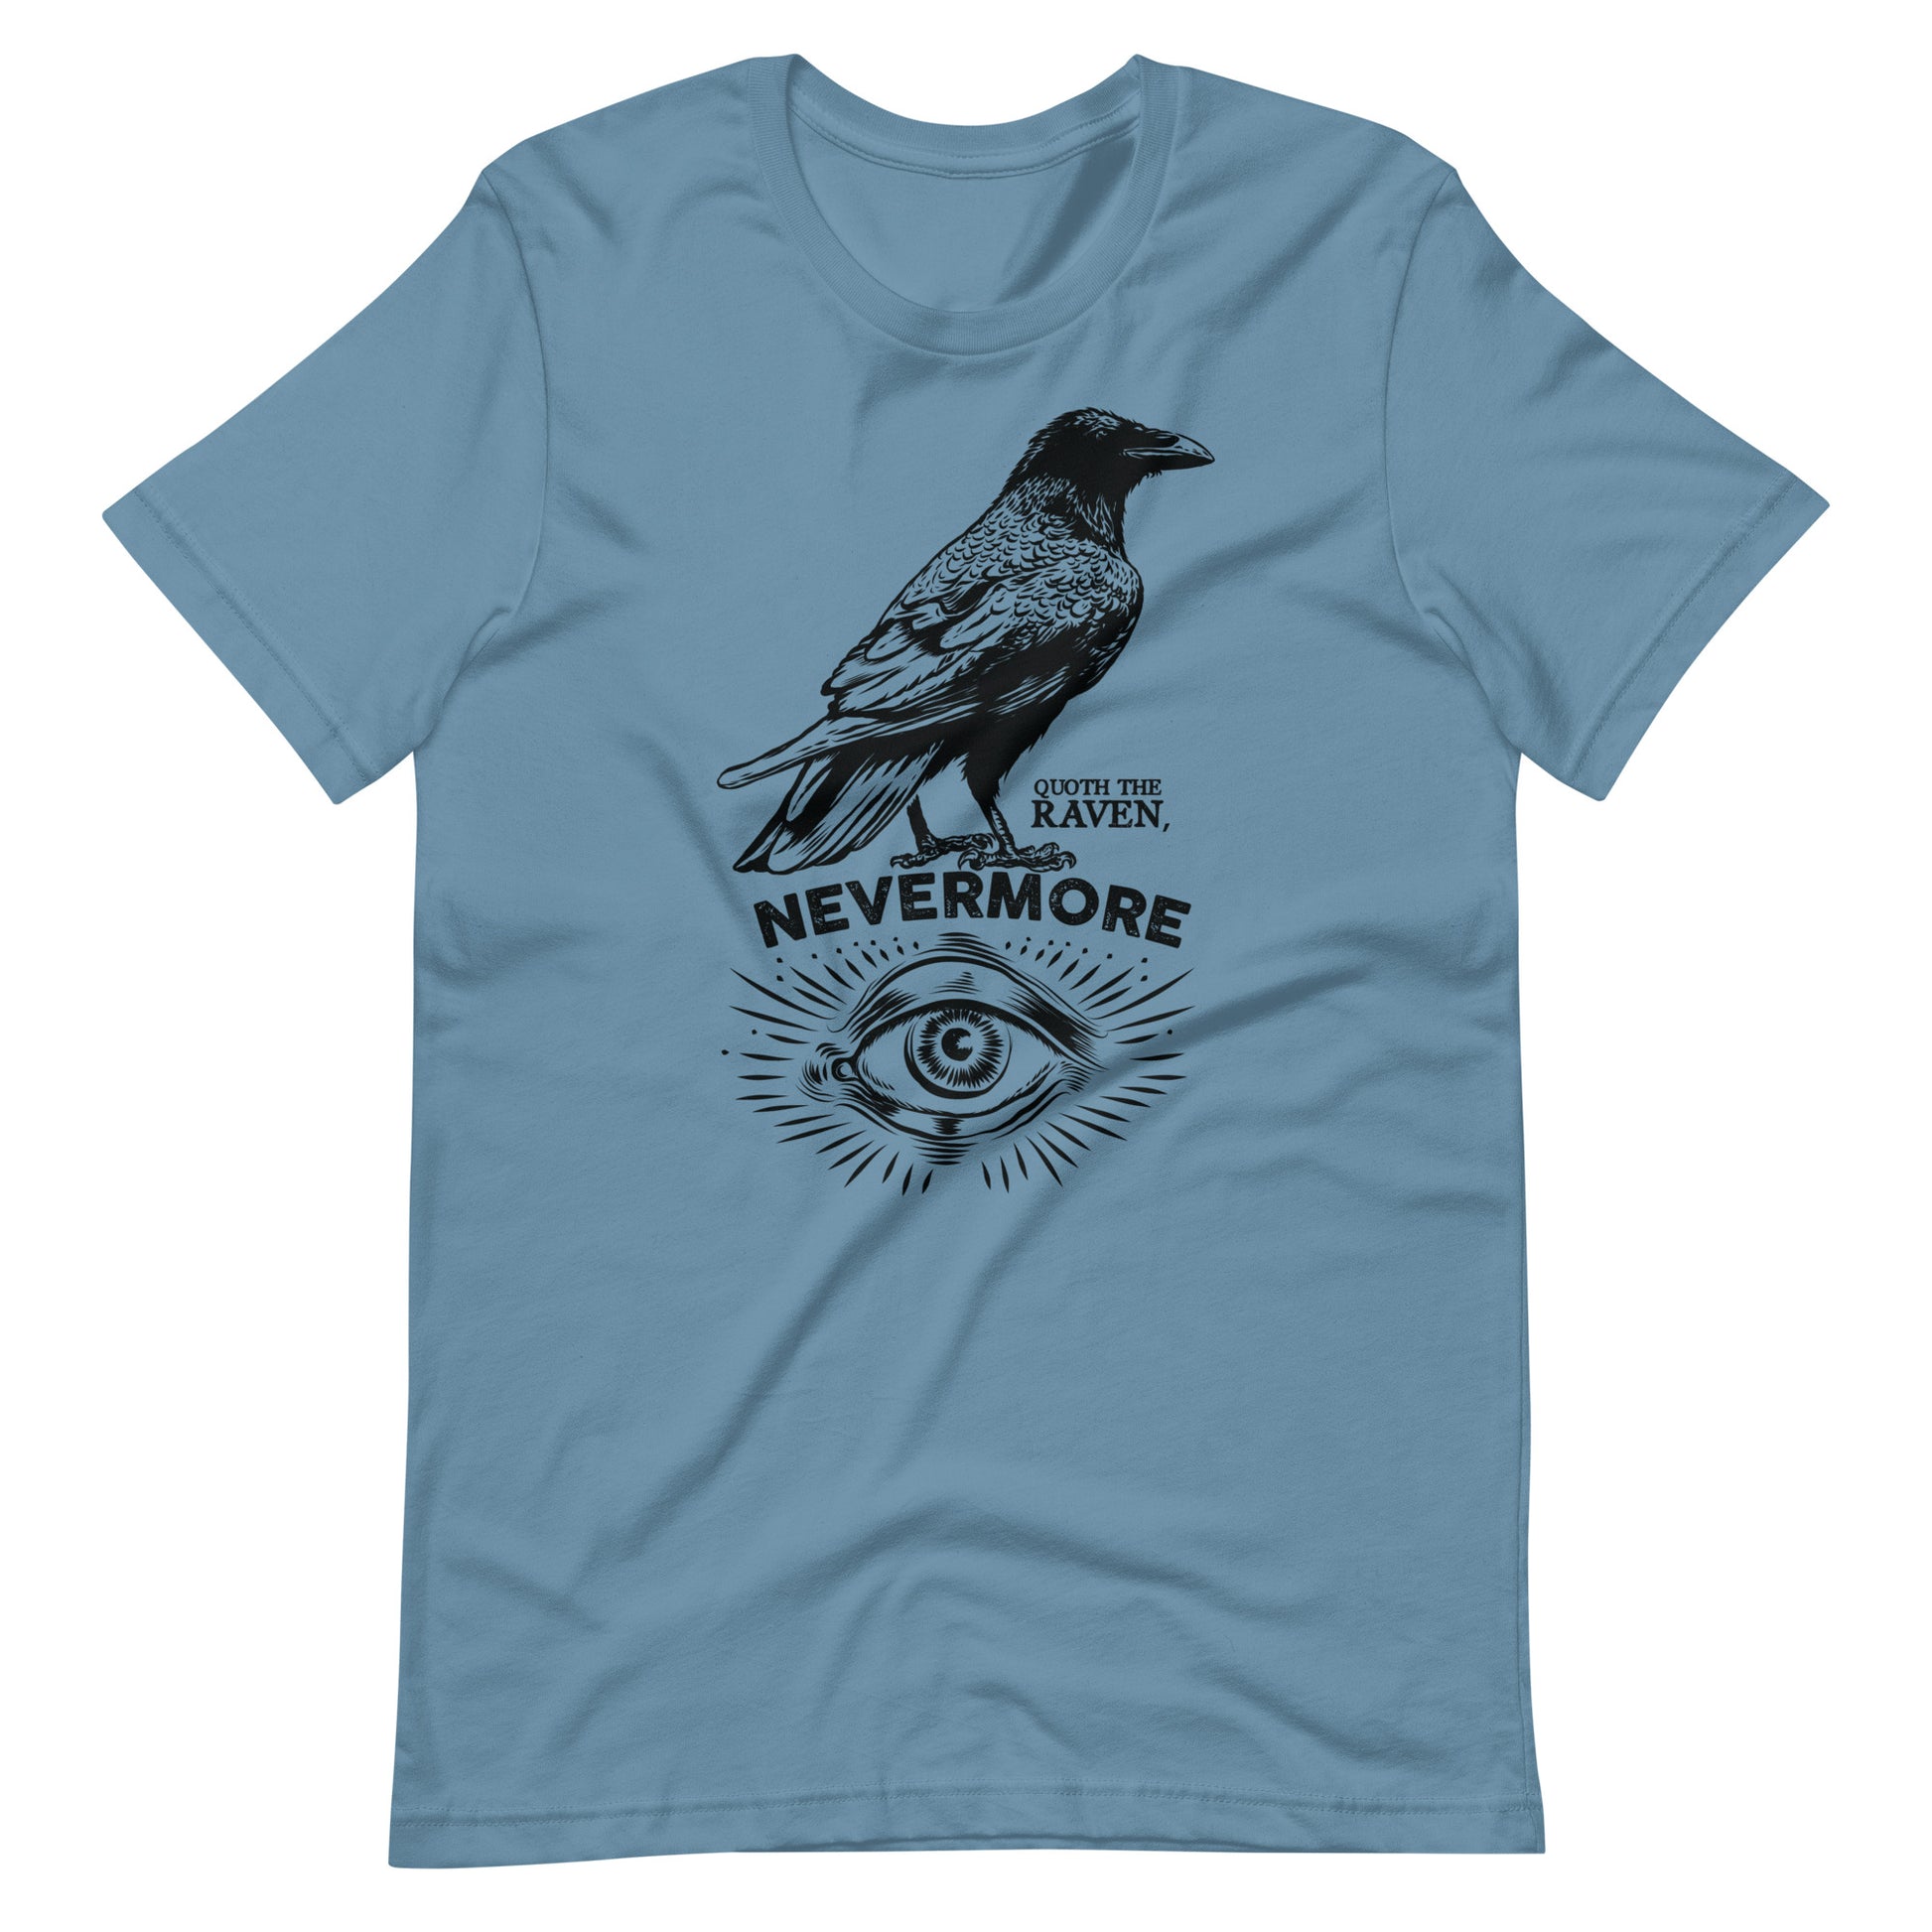 Quoth the Raven Nevermore - Men's t-shirt - Steel Blue Front